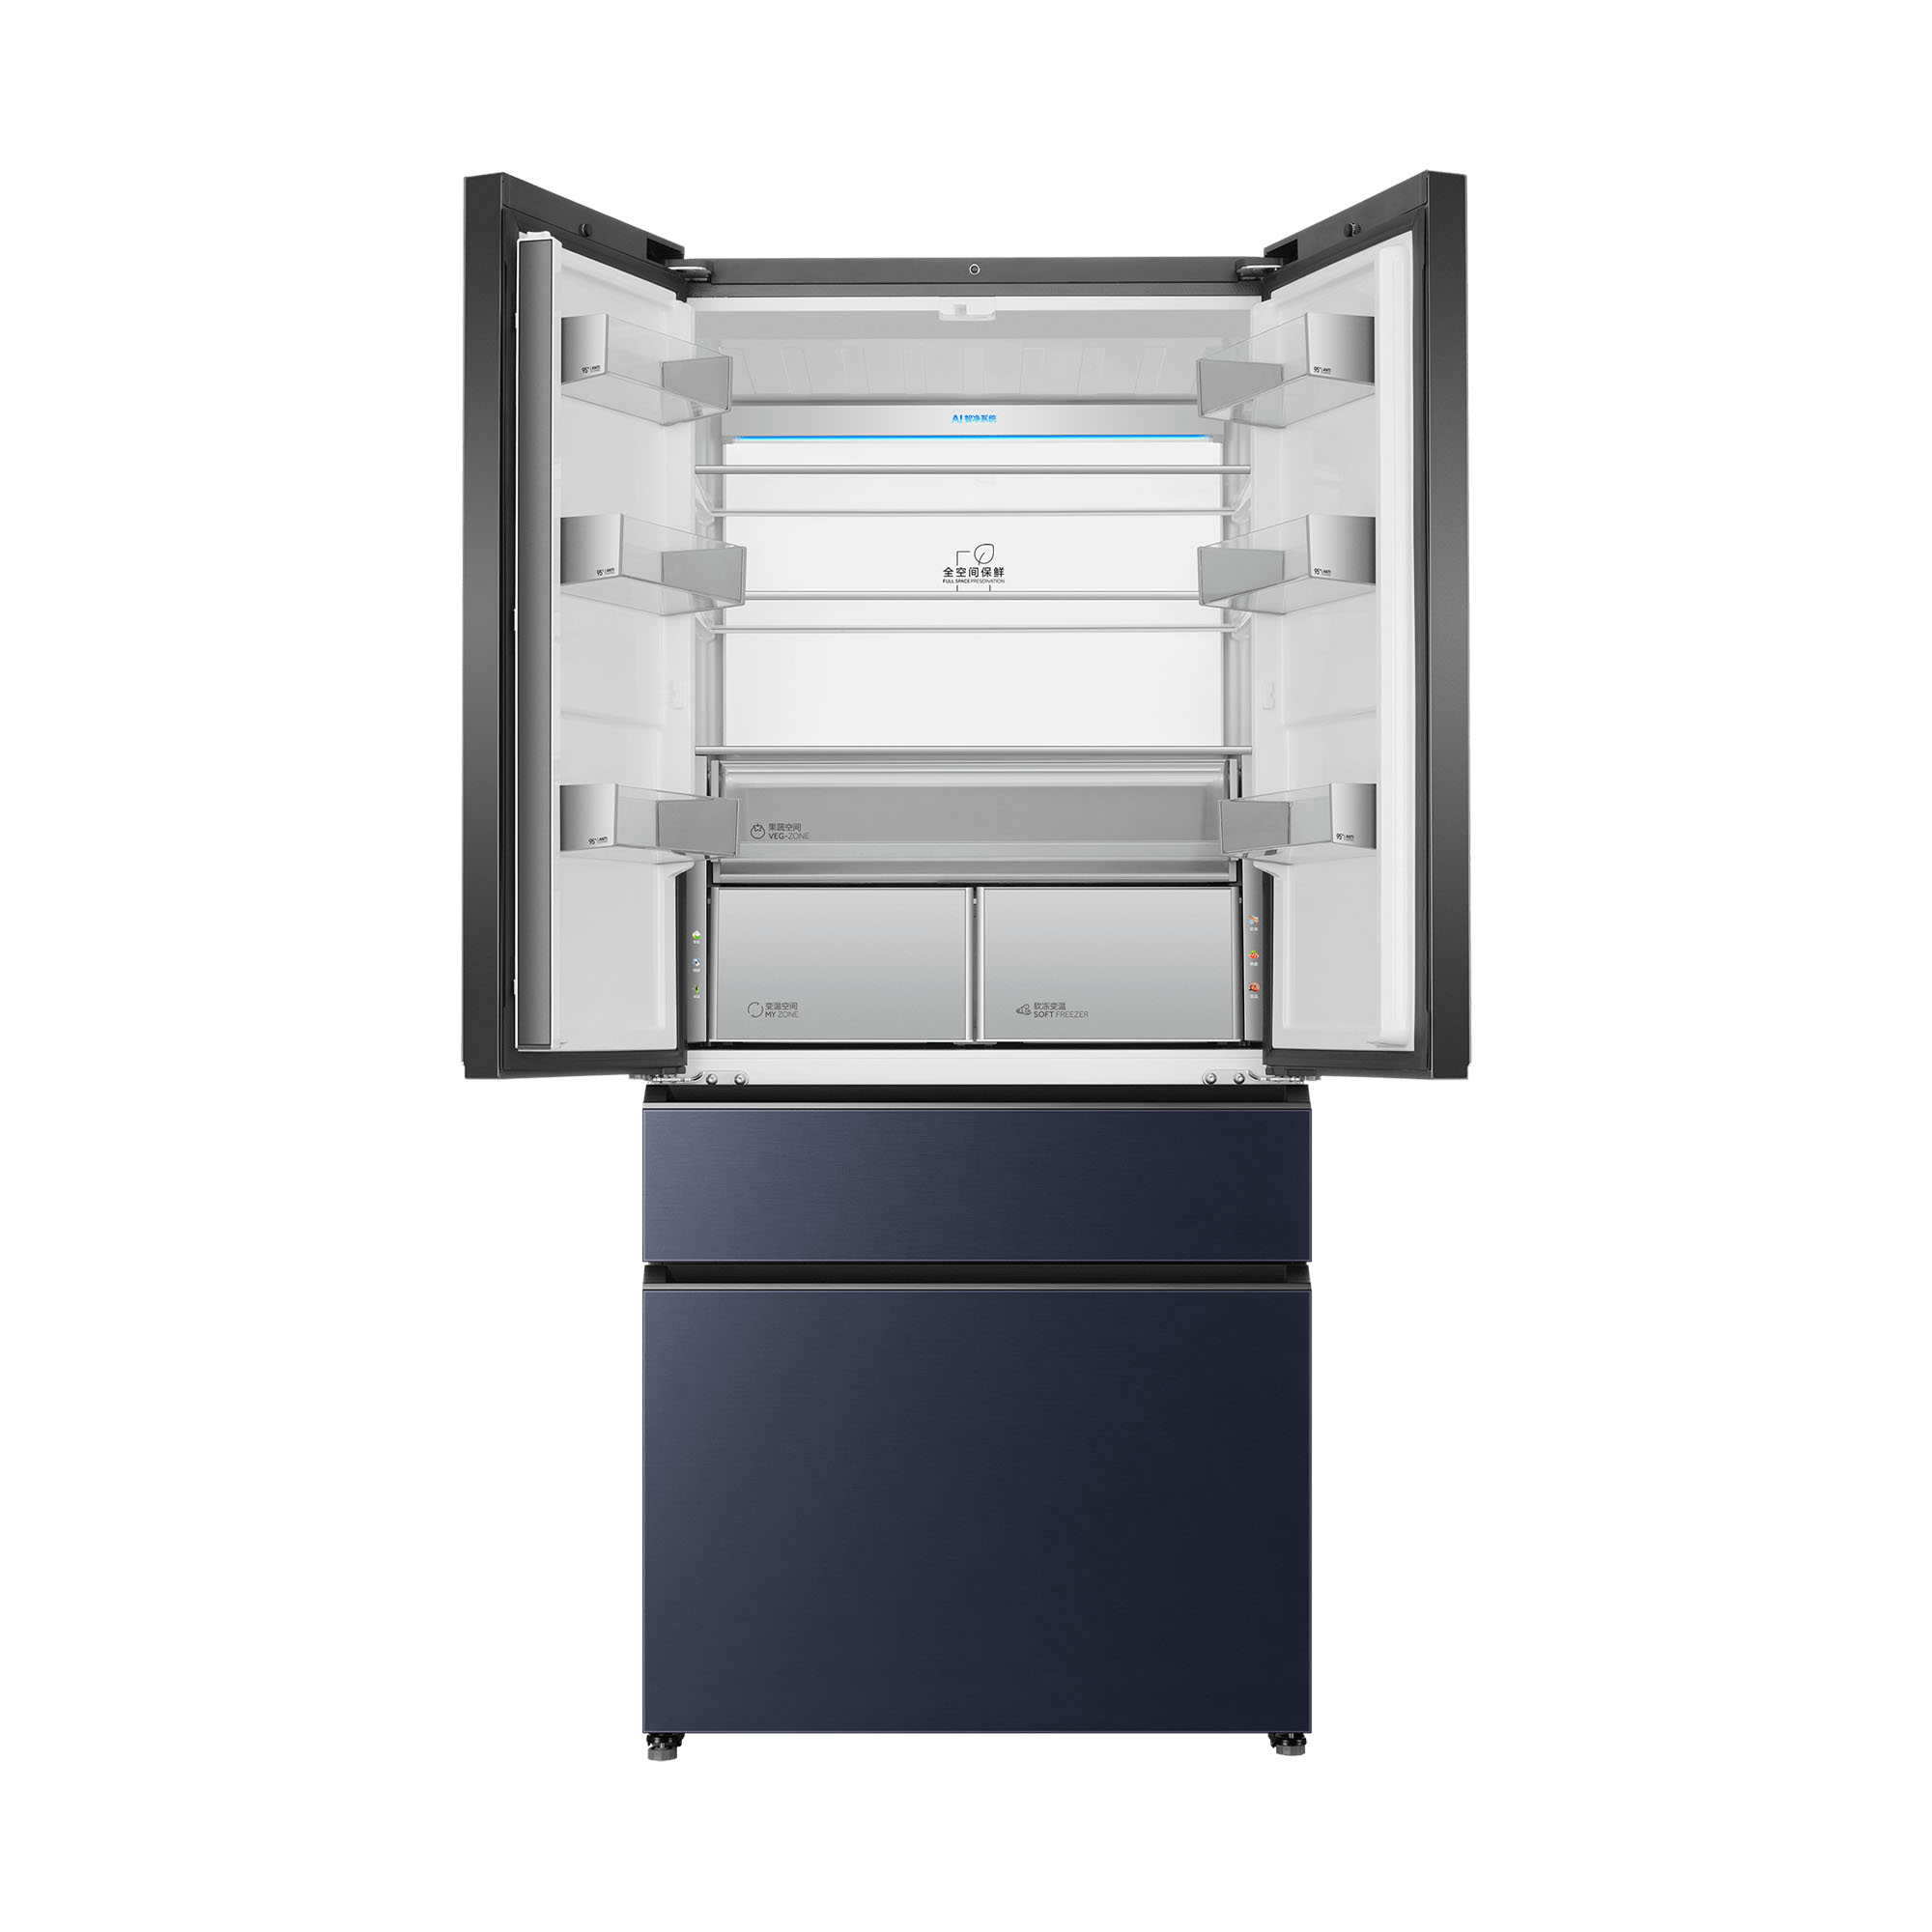 Haier 830 Global refrigerator